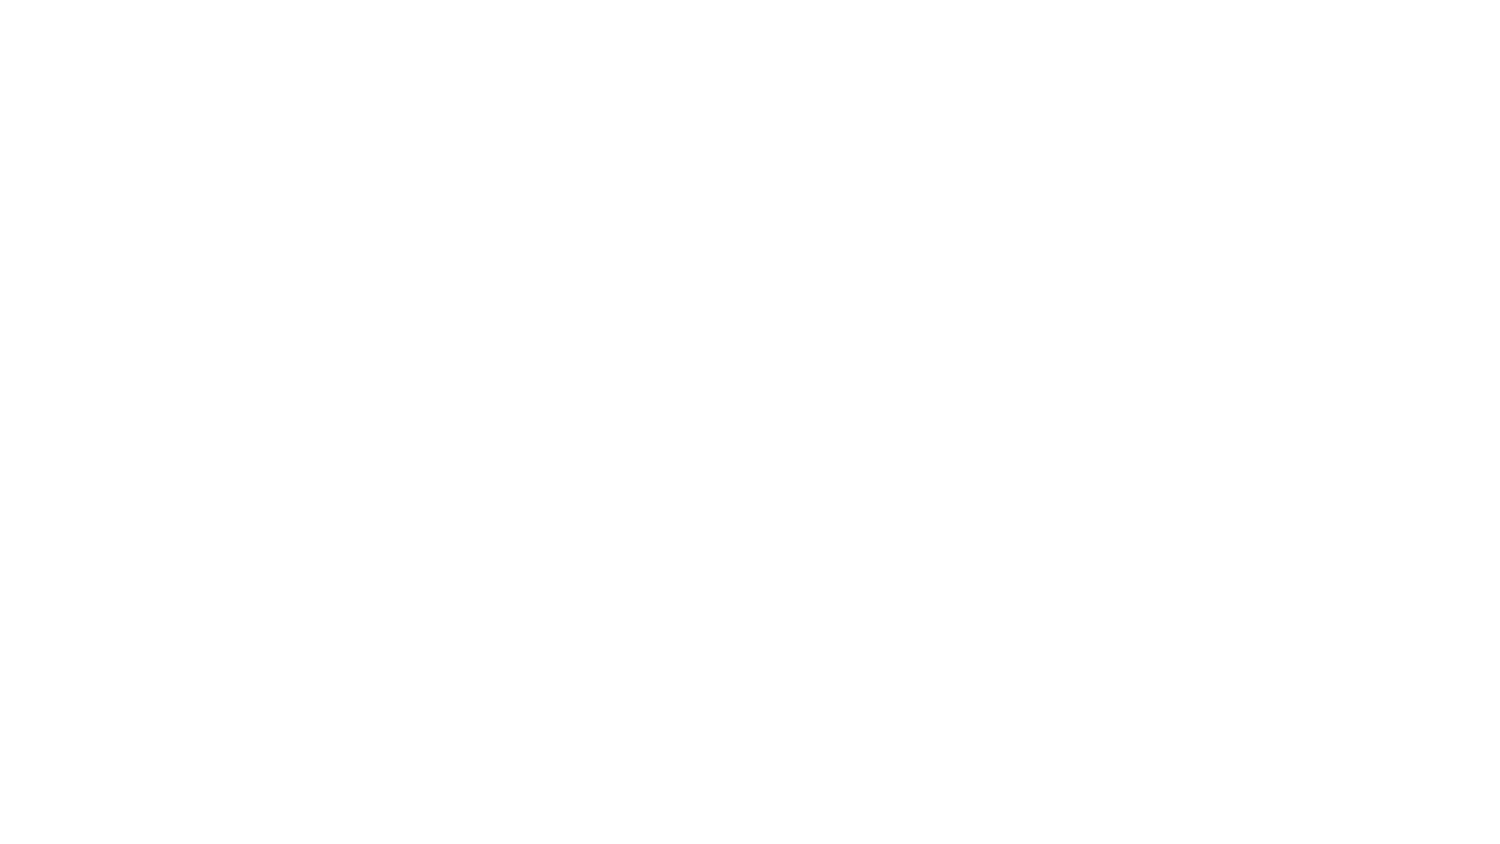 Sinclair creations 